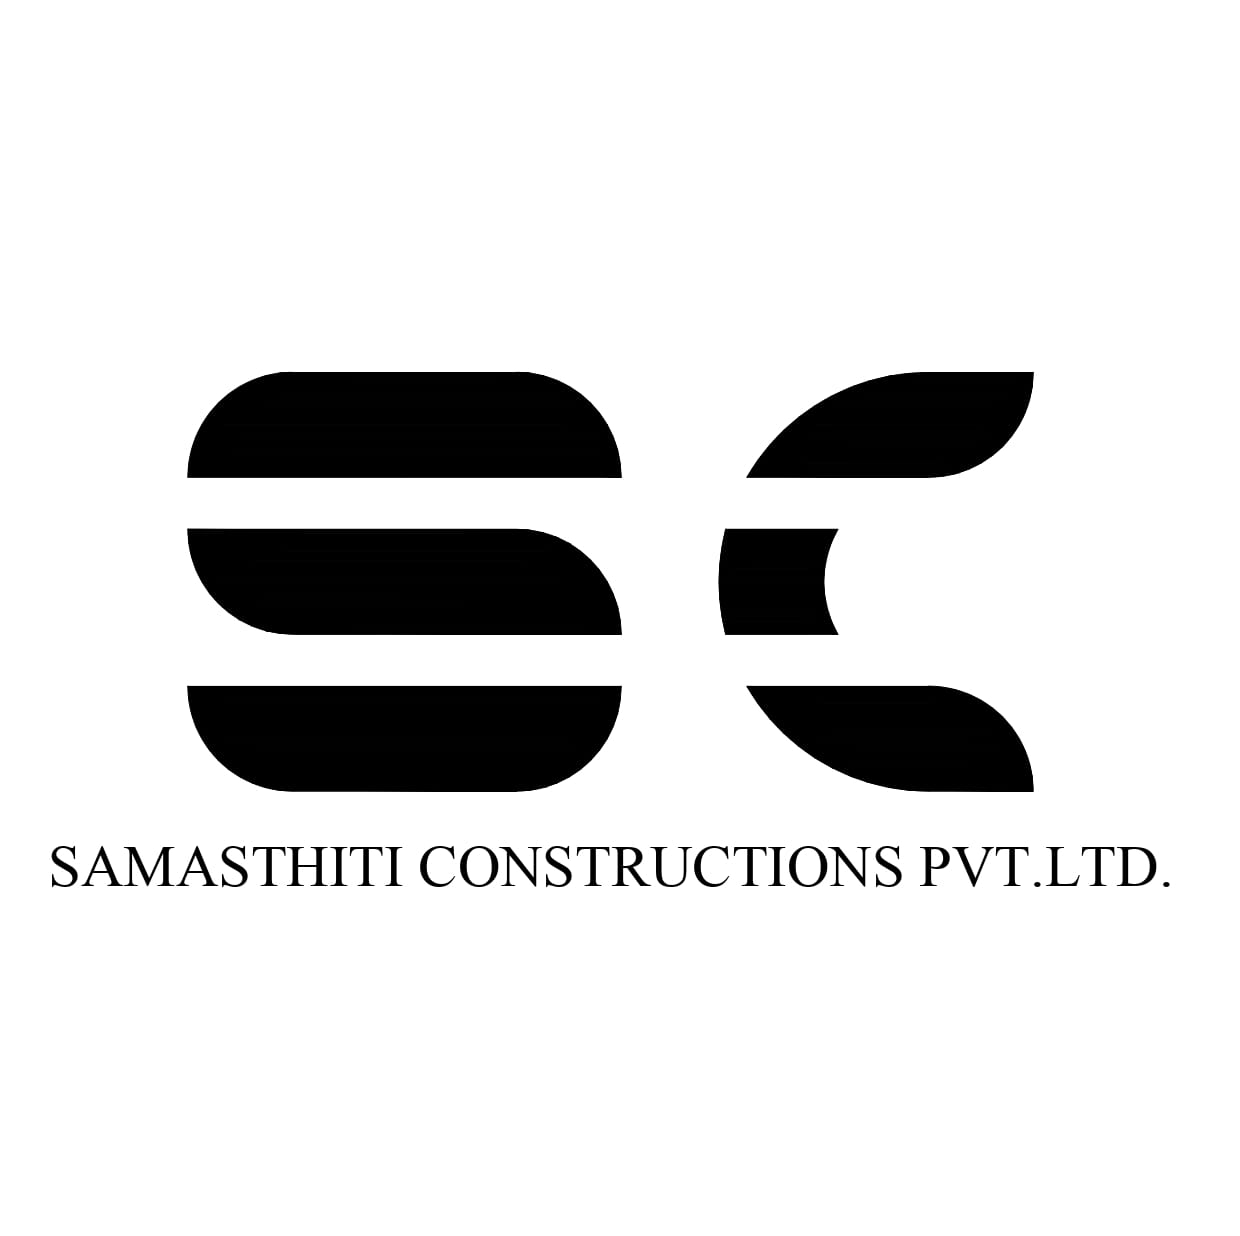 Samasthiti Constructions Pvt.Ltd|Architect|Professional Services